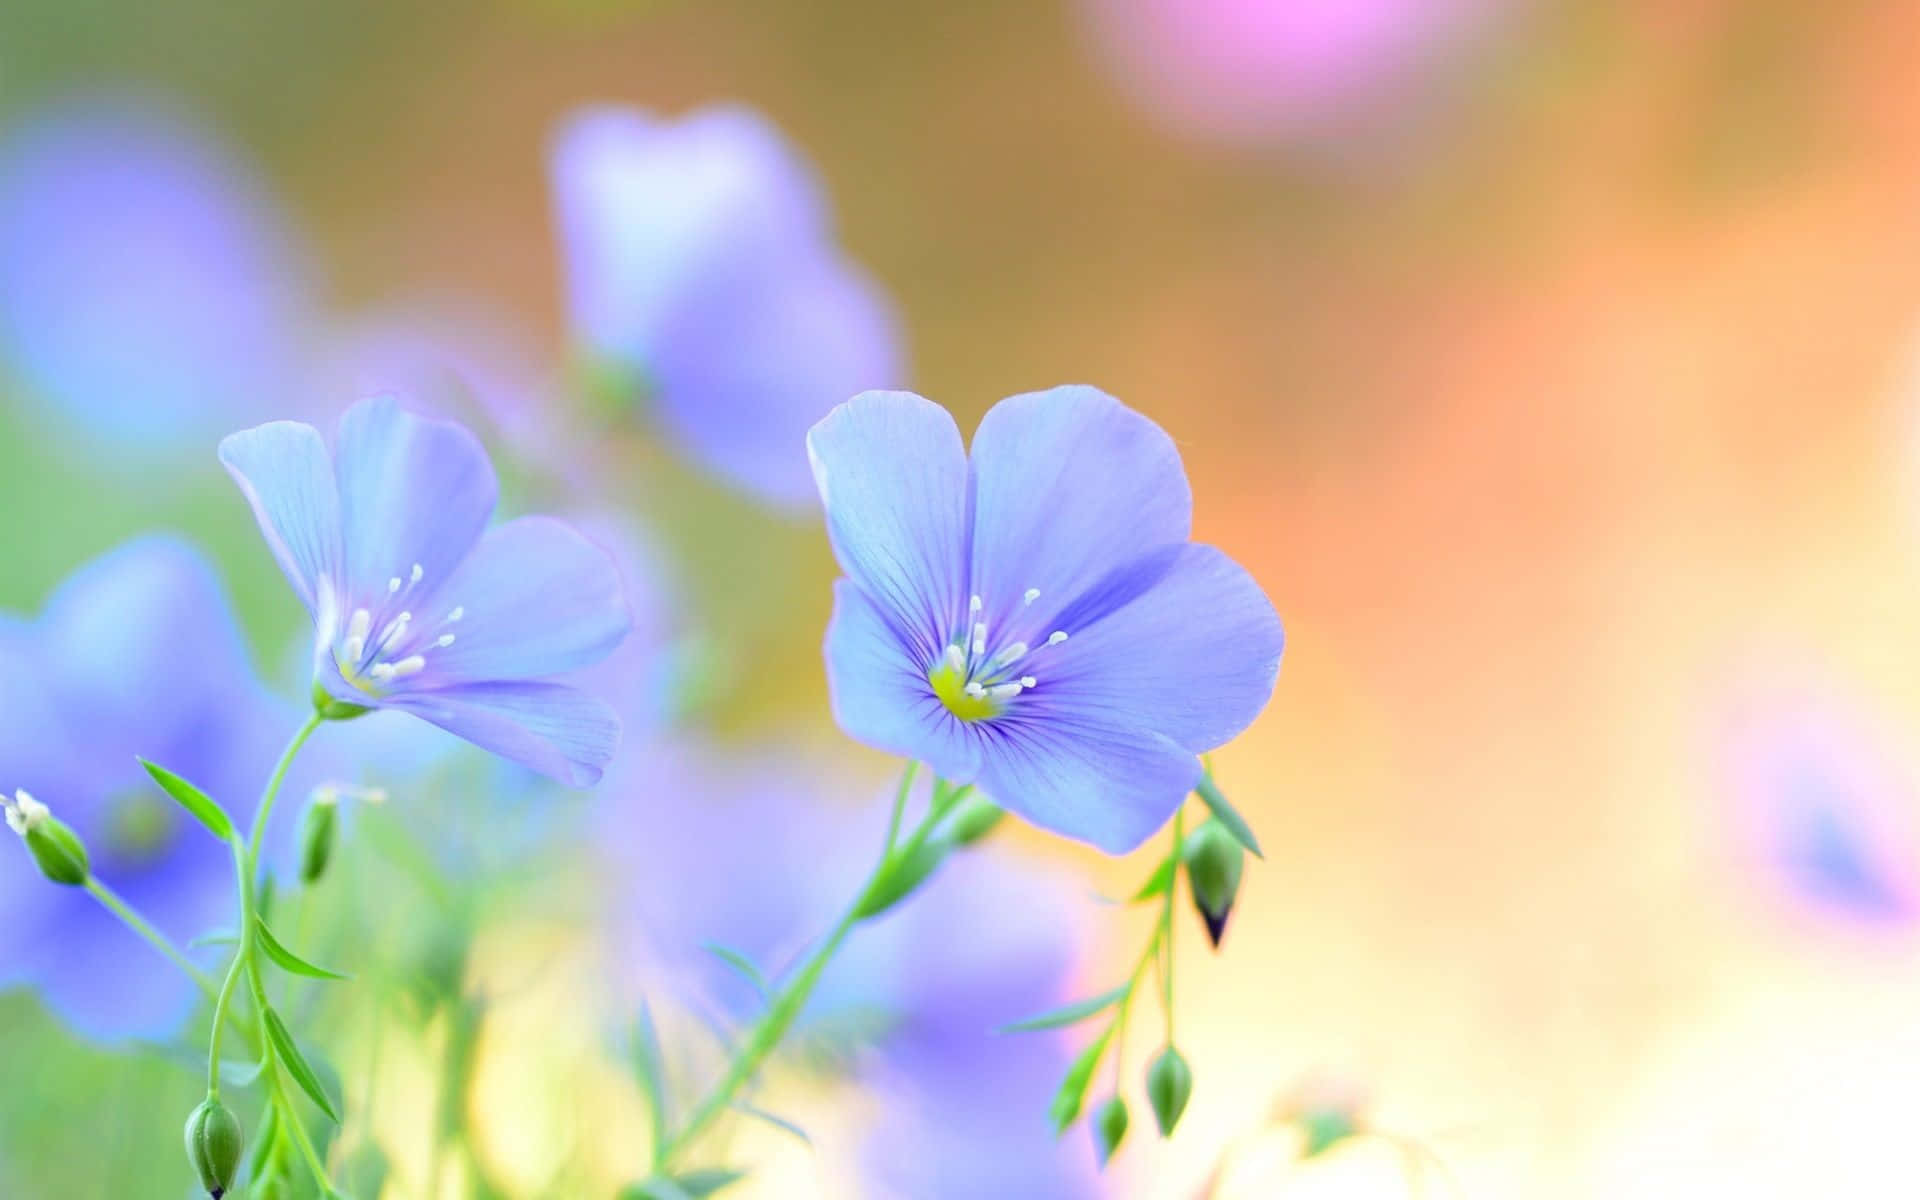 Imagende Lewis Flax Con Flores Azules.